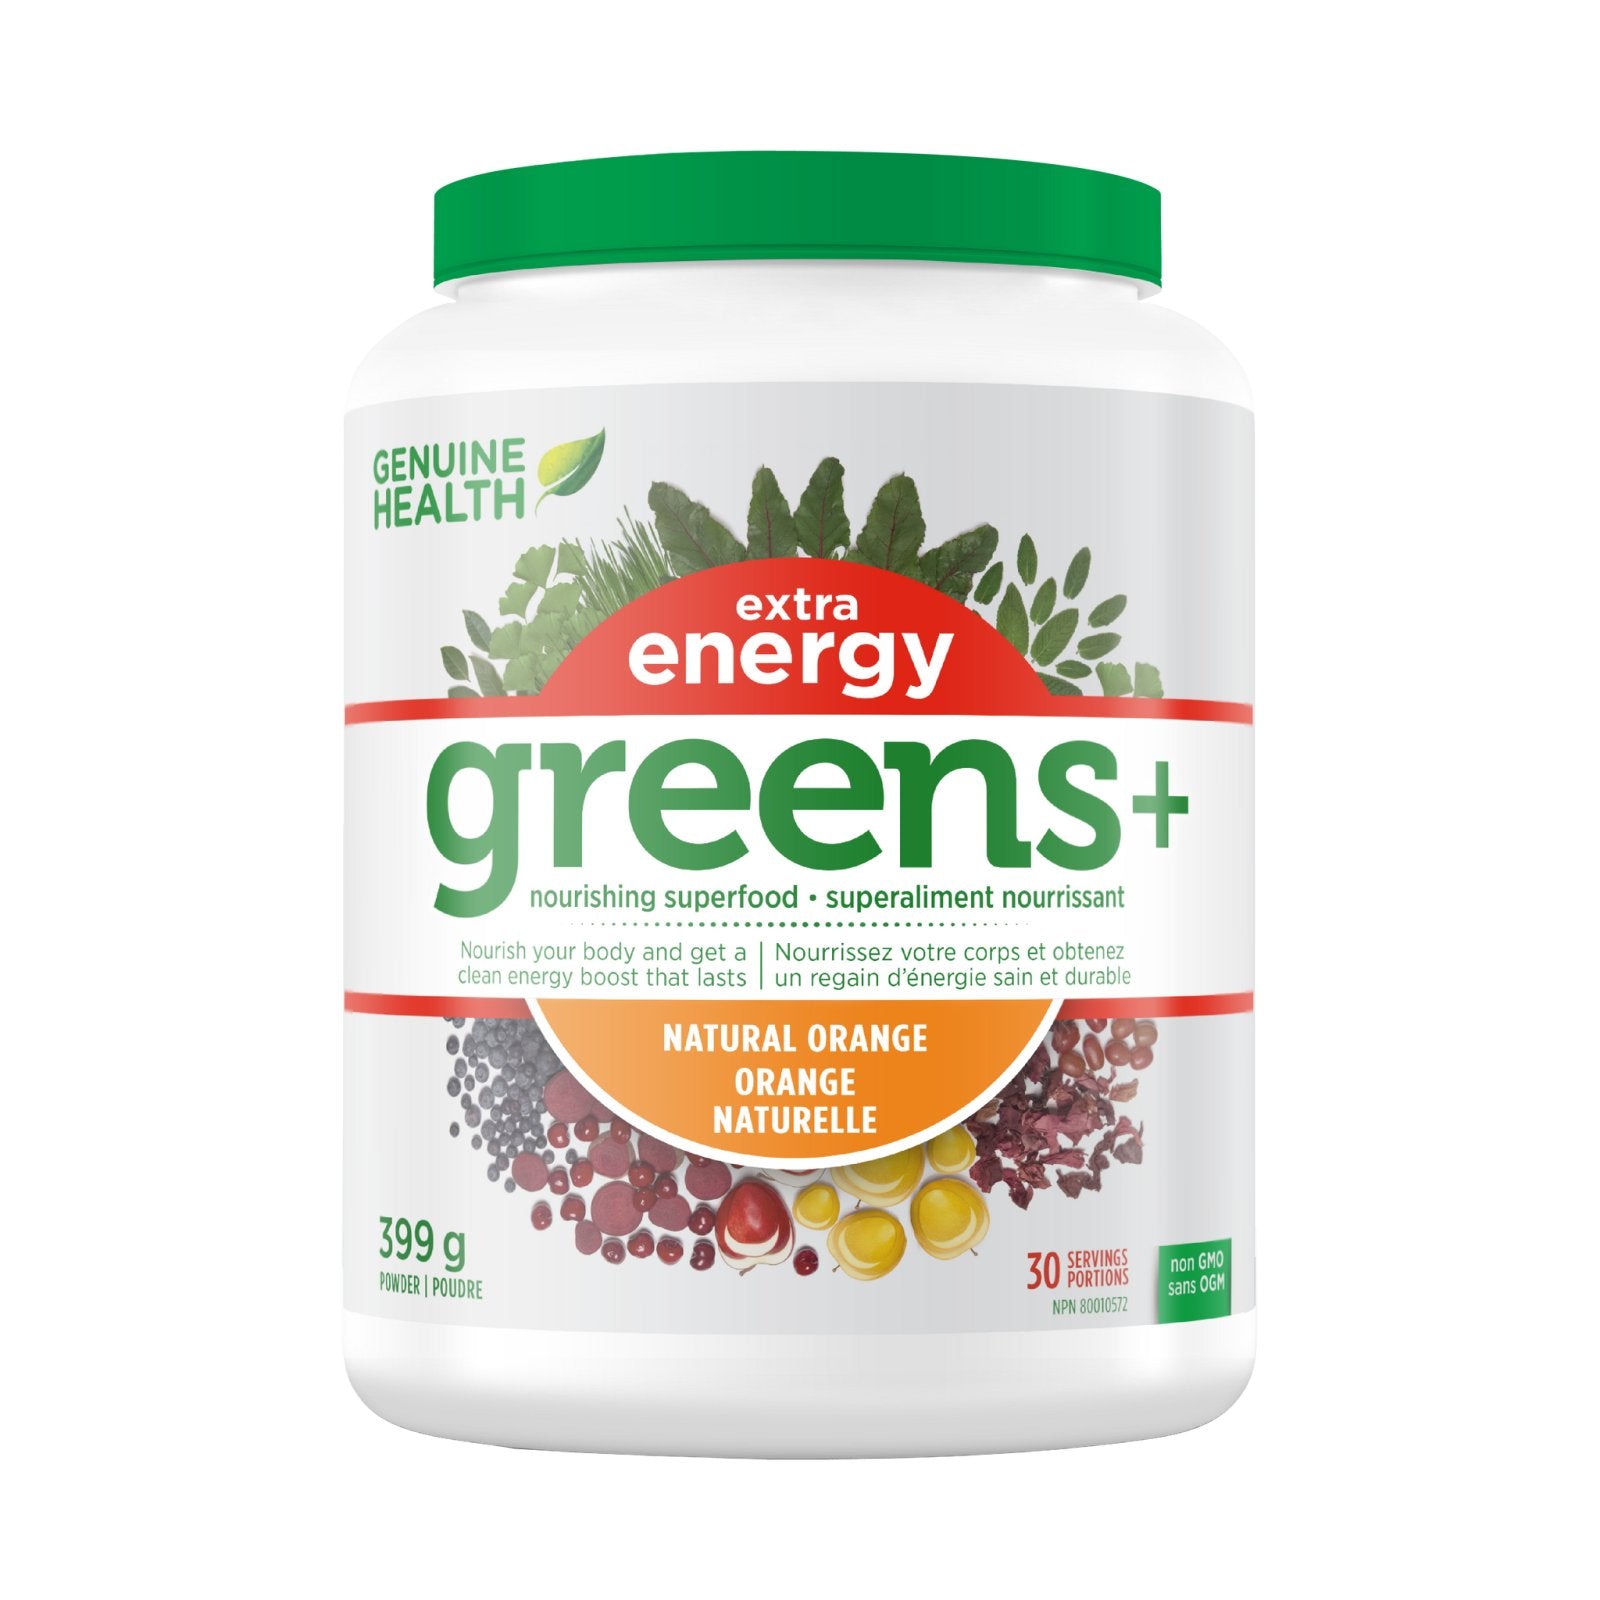 Genuine Health greens+ extra energy natural orange (399 g)